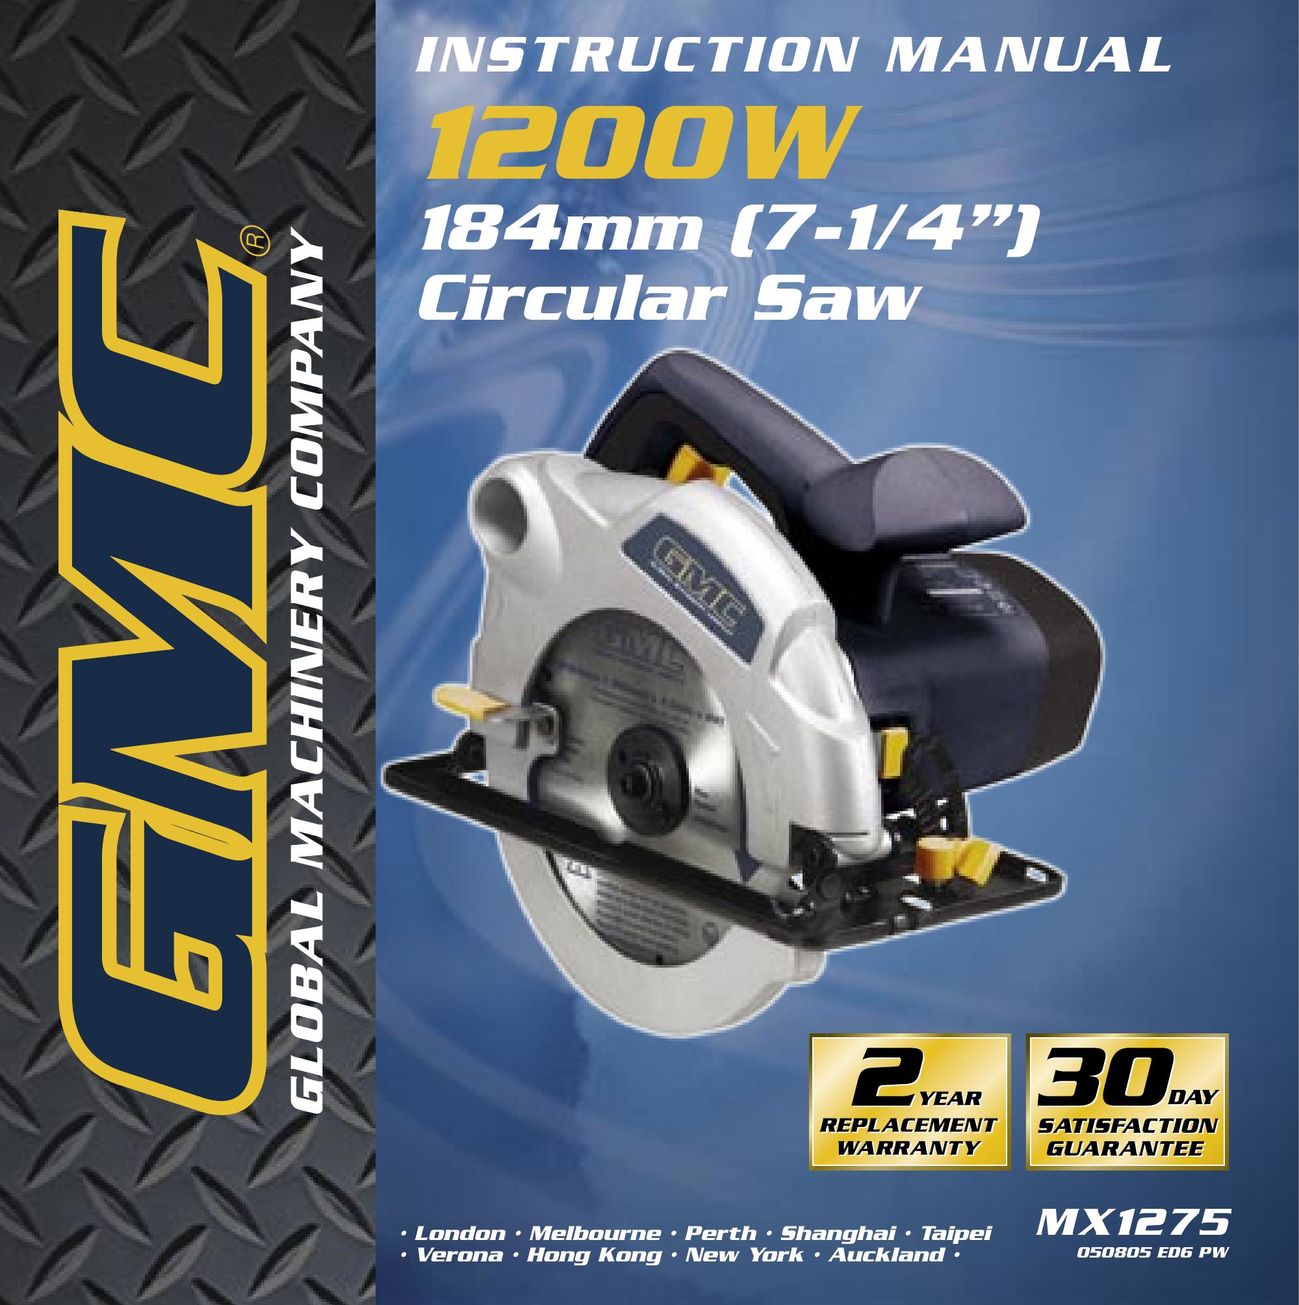 Global Machinery Company MX1275 Saw User Manual